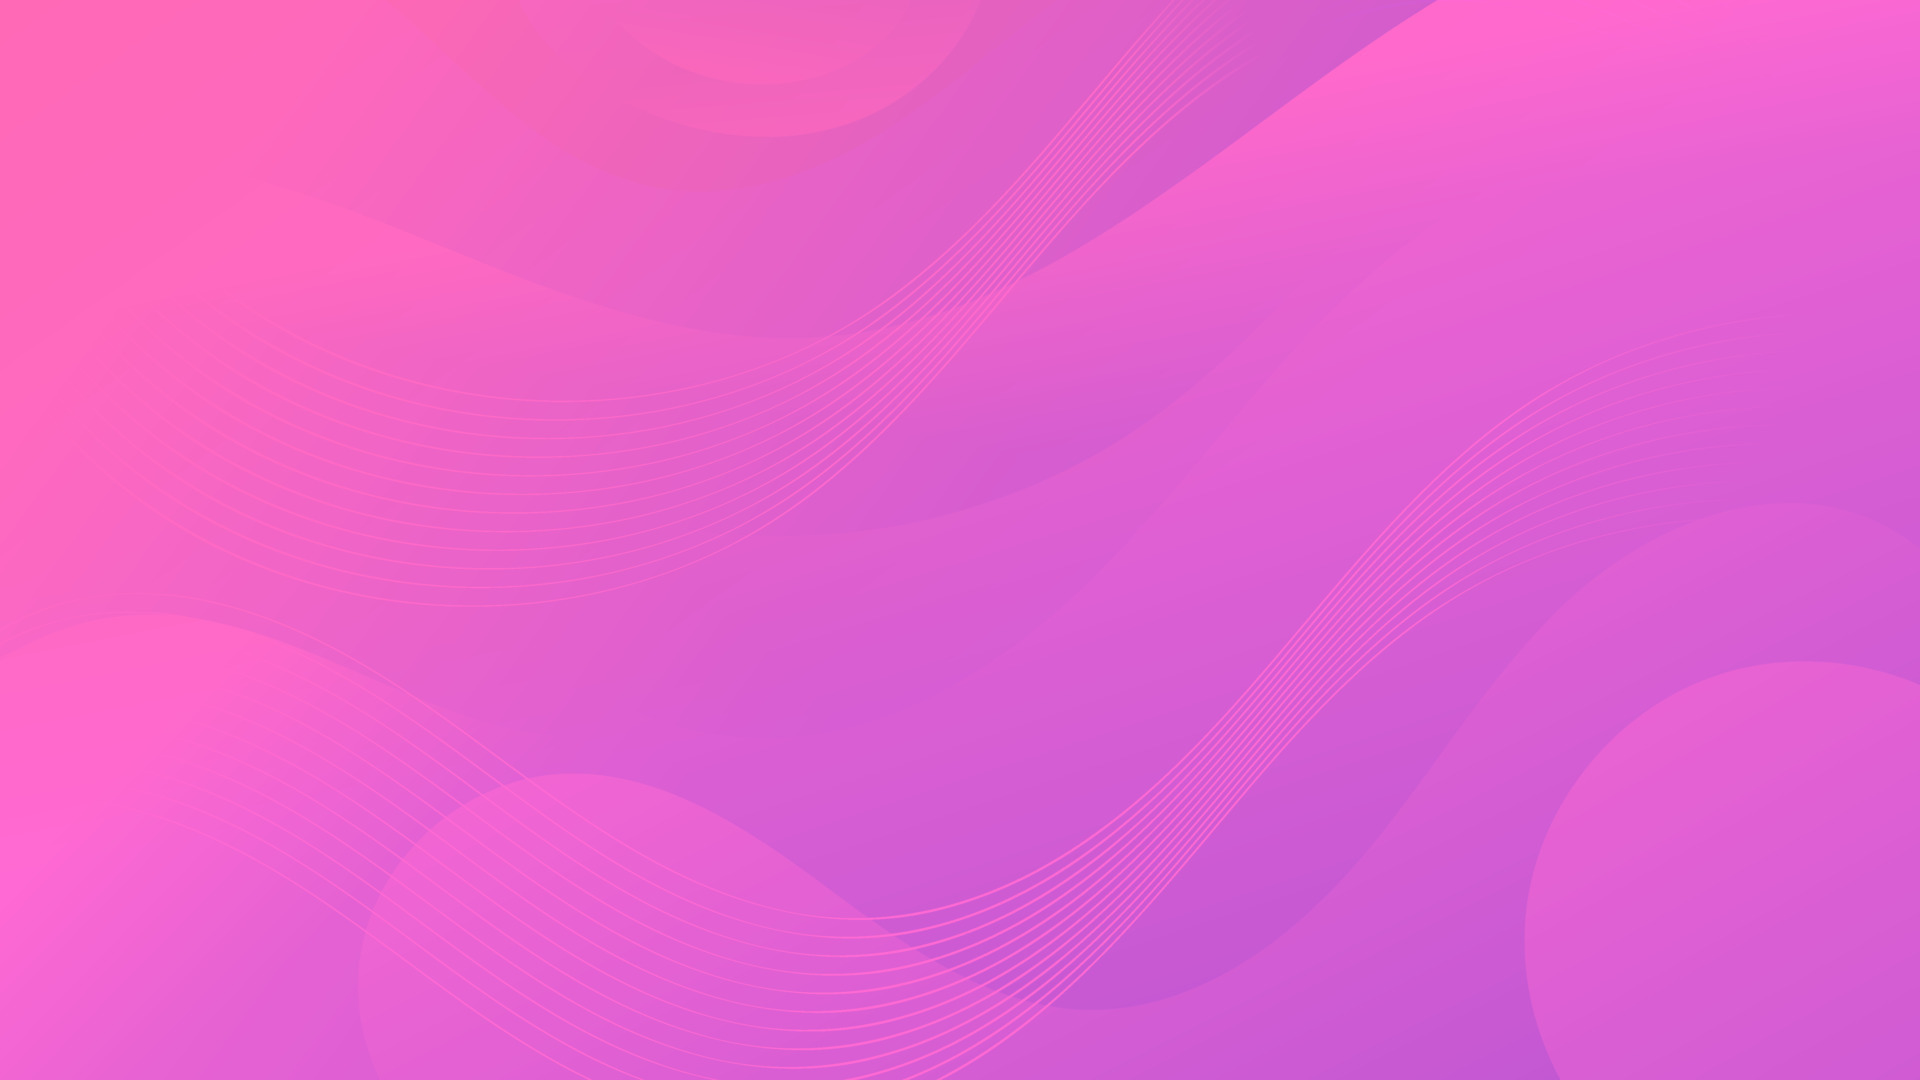 Abstract Gradient Purple Pink liquid Wave Background 21646206 Vector ...